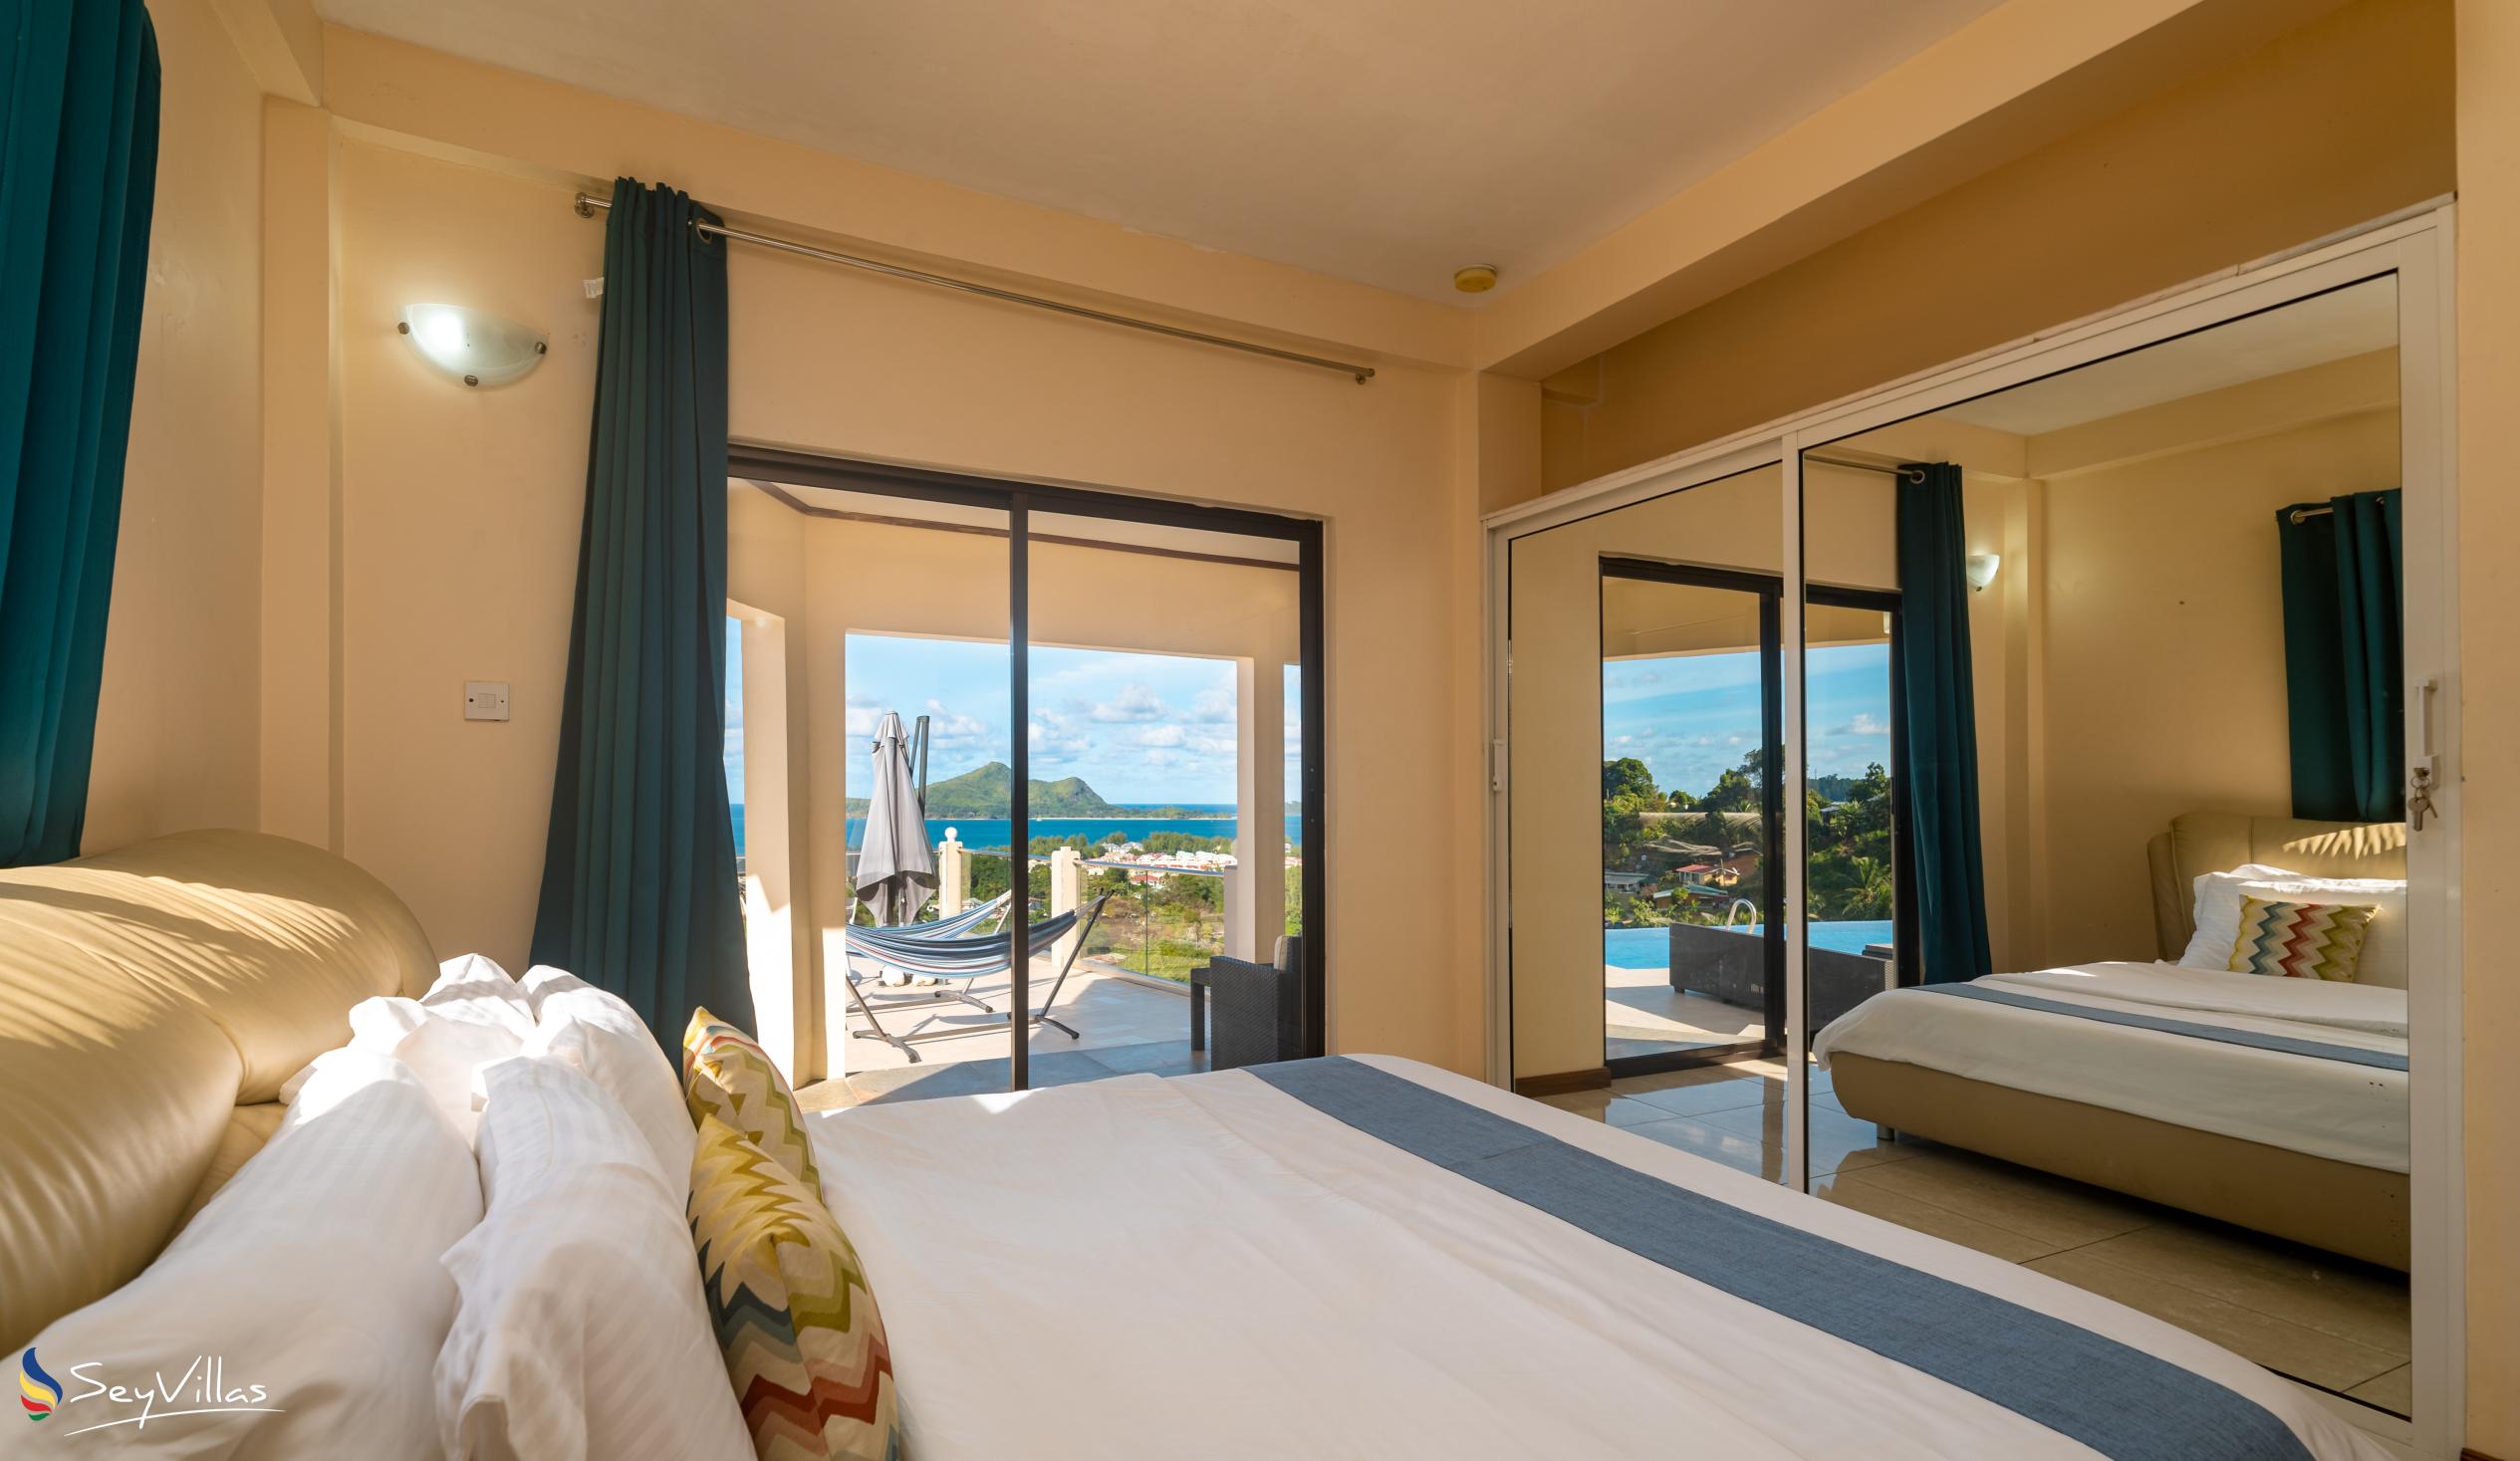 Foto 78: Maison L'Horizon - Appartamento con 2 camere Vann Nor - Mahé (Seychelles)